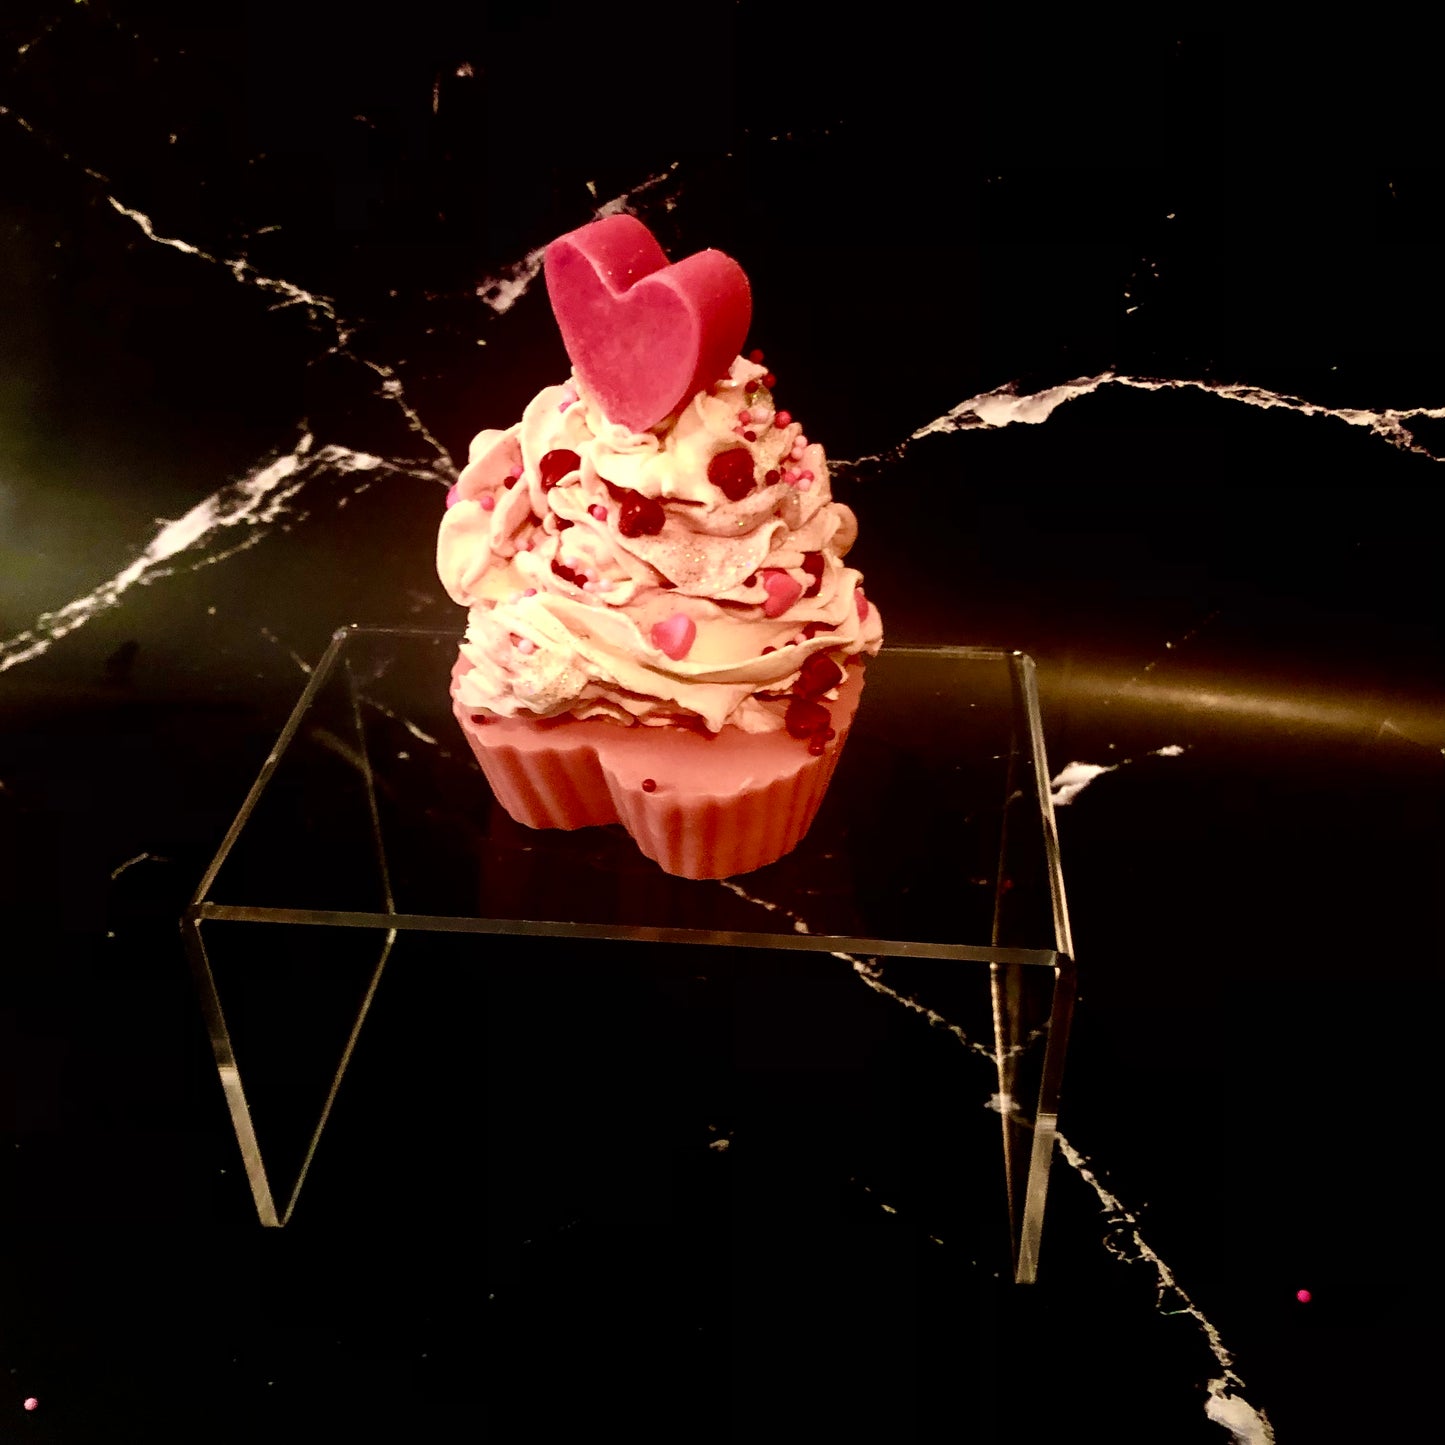 Heart Valentine's Day Cupcake Soap Handmade Fun Gift Gluten-free Sulphate -Free Handcrafted Homemade Candy Romantic Romance Girlfriend Boyfriend